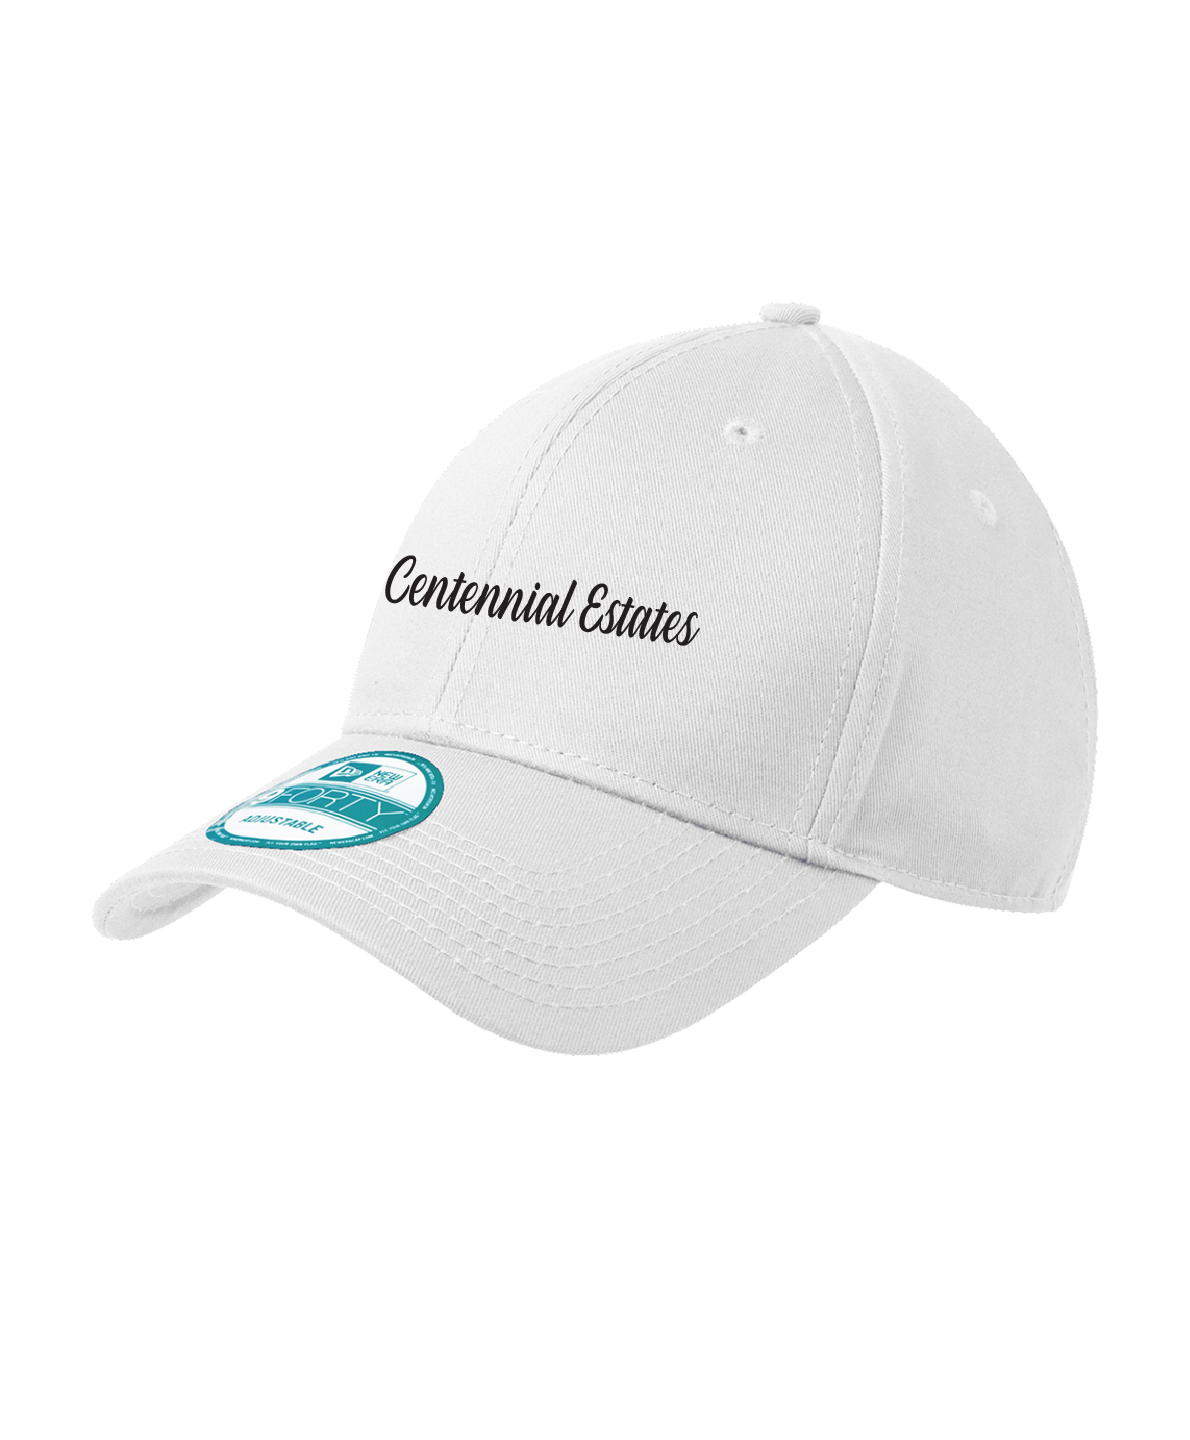 Centennial Estates - New Era® - Adjustable Structured Cap